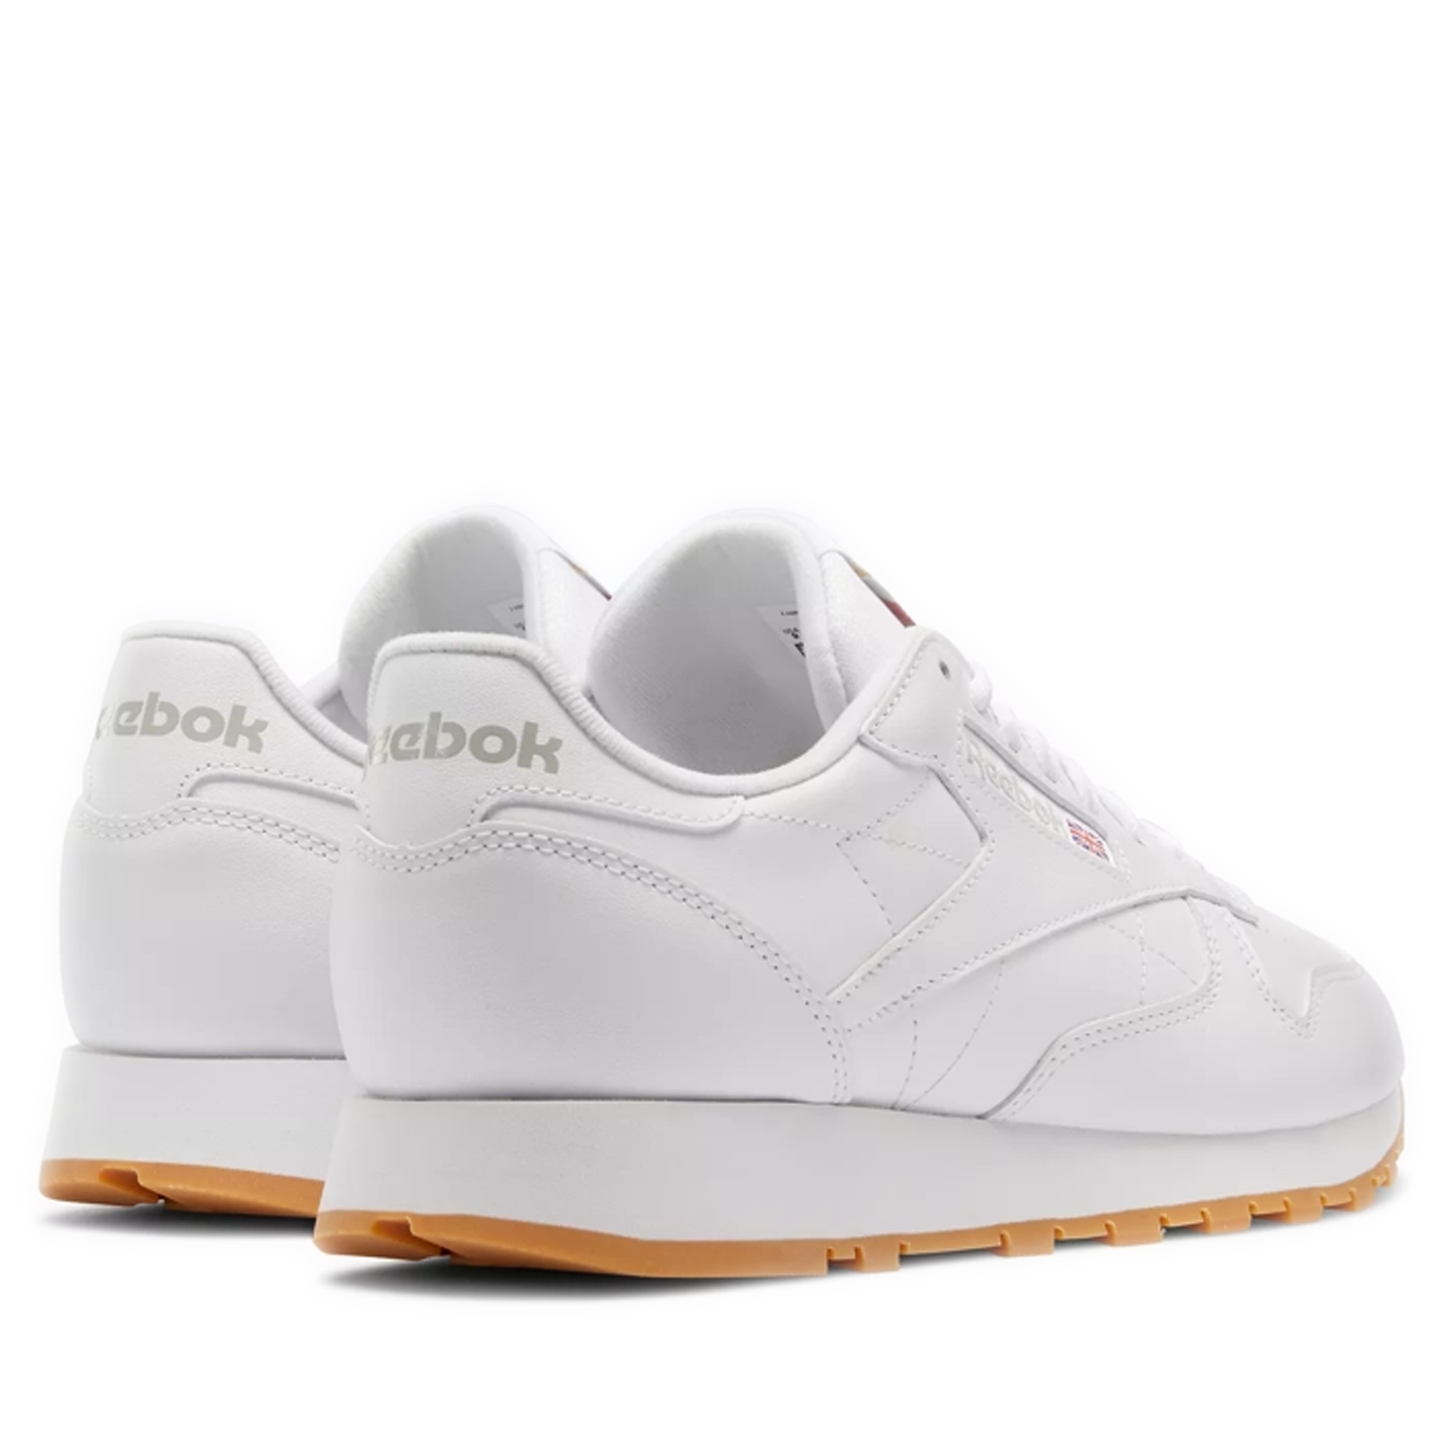 Men's Reebok Classic Leather Shoes - Ftwr White / Pure Grey 3 / Reebok Rubber Gum-03